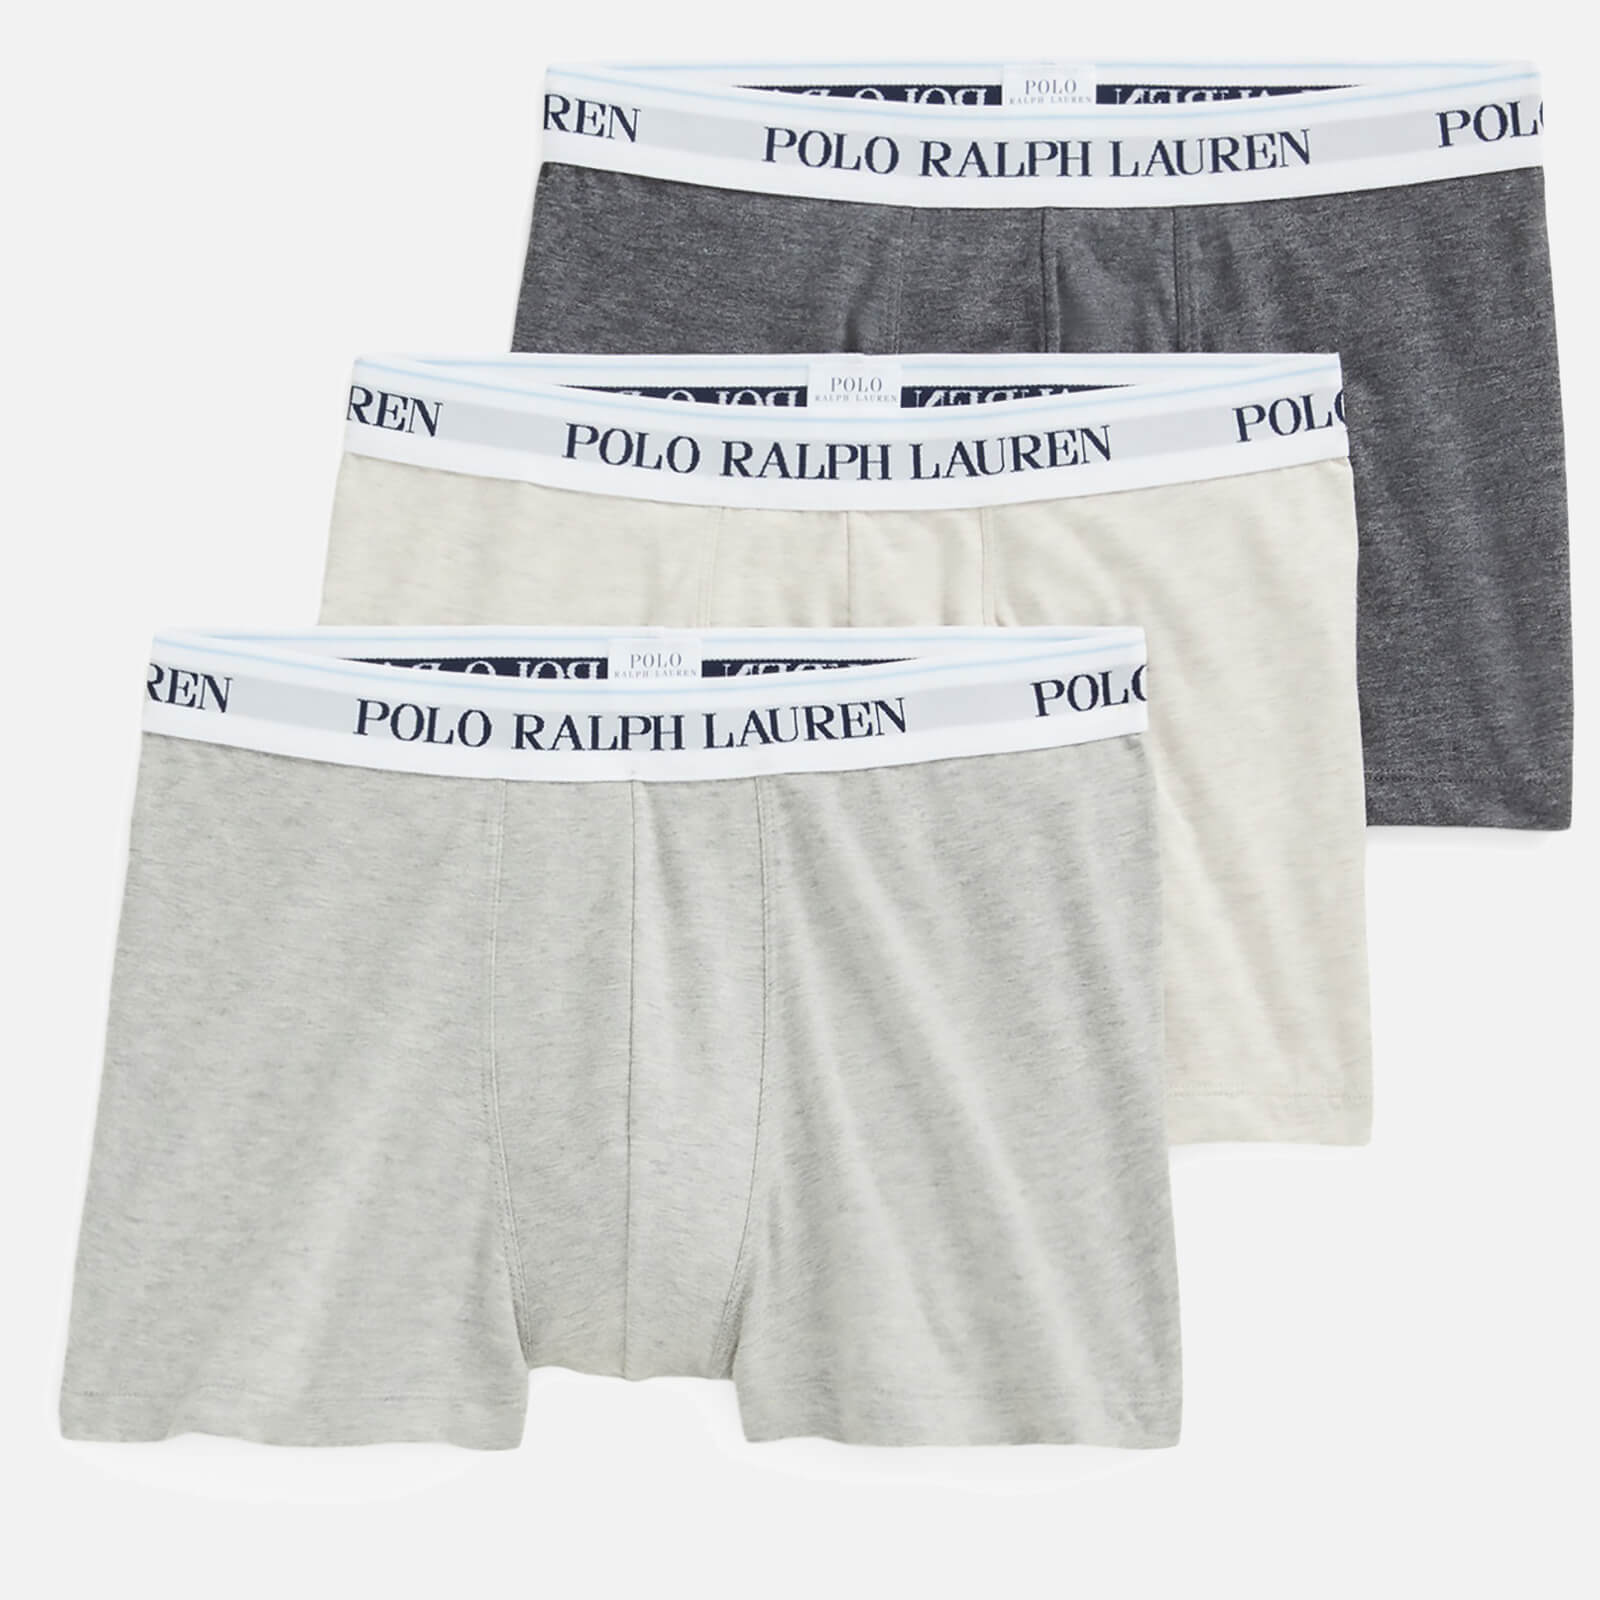 Polo Ralph Lauren Men's 3-Pack Trunk Boxer Shorts - Andover Heather/Light Sport Heather/Charcoal Hea